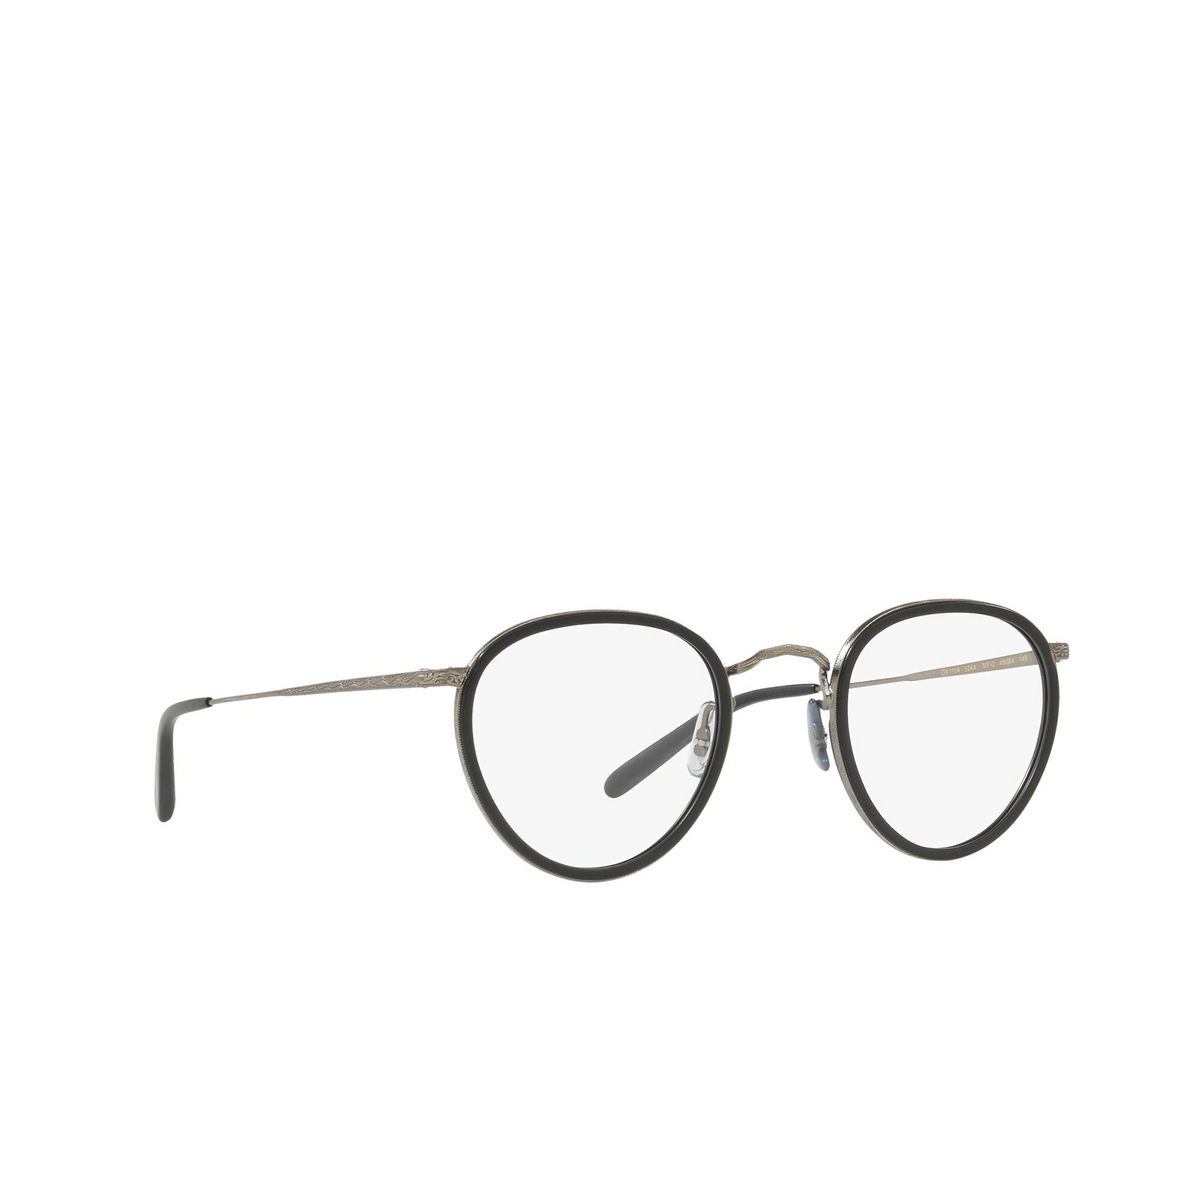 Oliver Peoples® Round Eyeglasses: Mp-2 OV1104 color Semi Matte Black 5244 - three-quarters view.